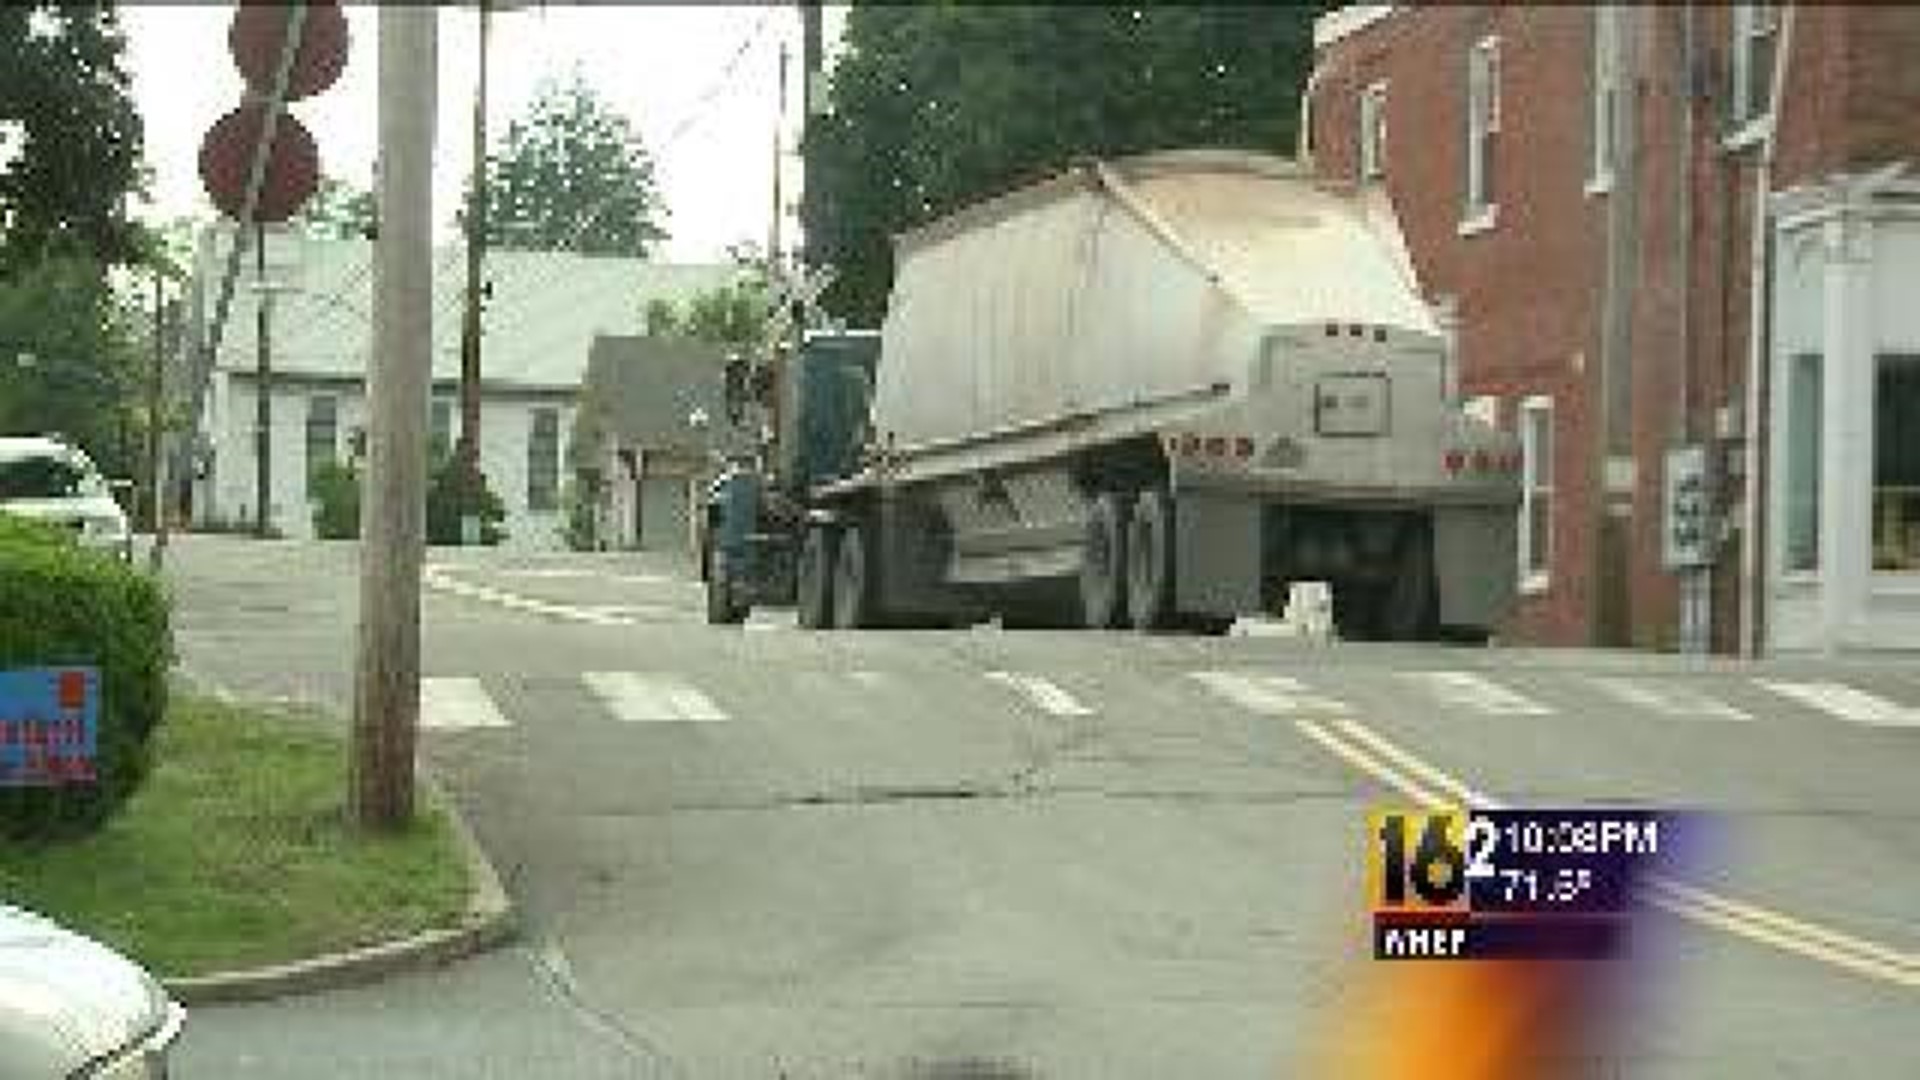 White Haven Residents Upset Over High Truck Traffic